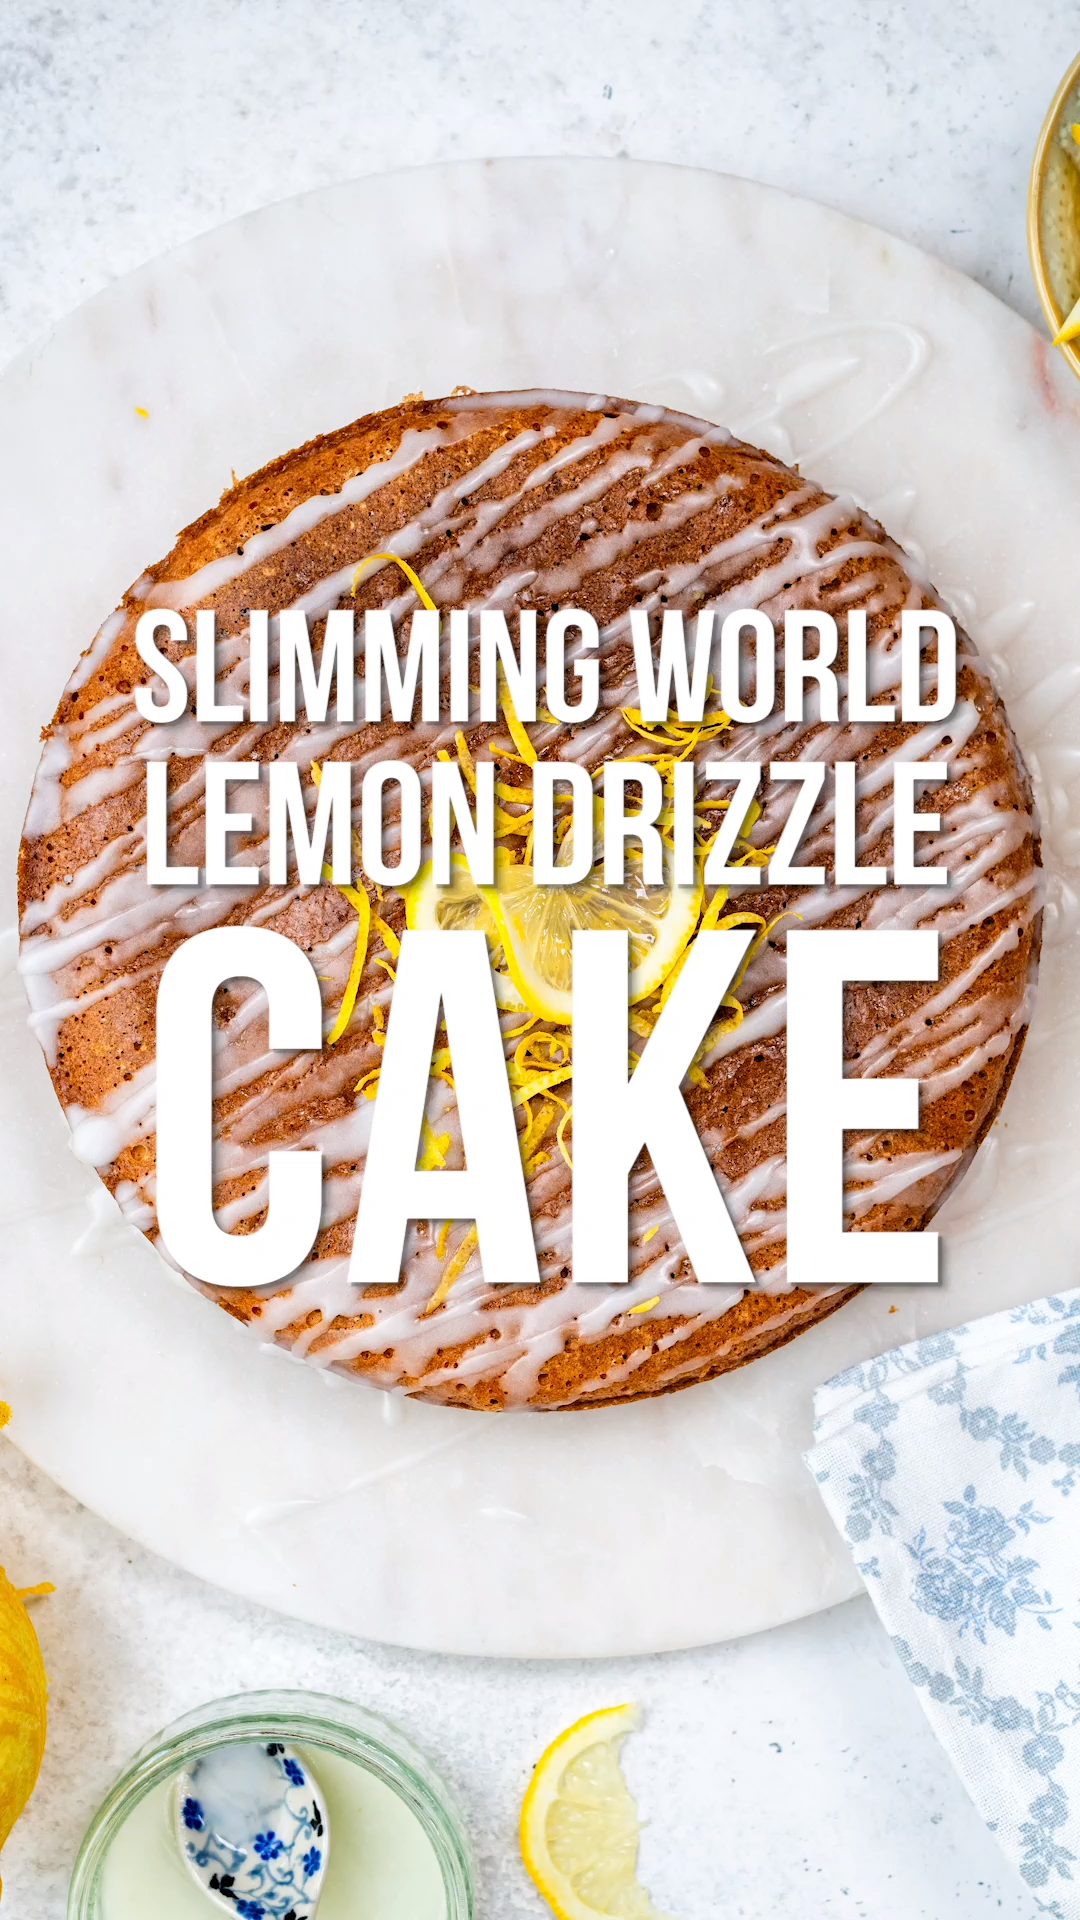 17 cake Healthy slimming world ideas